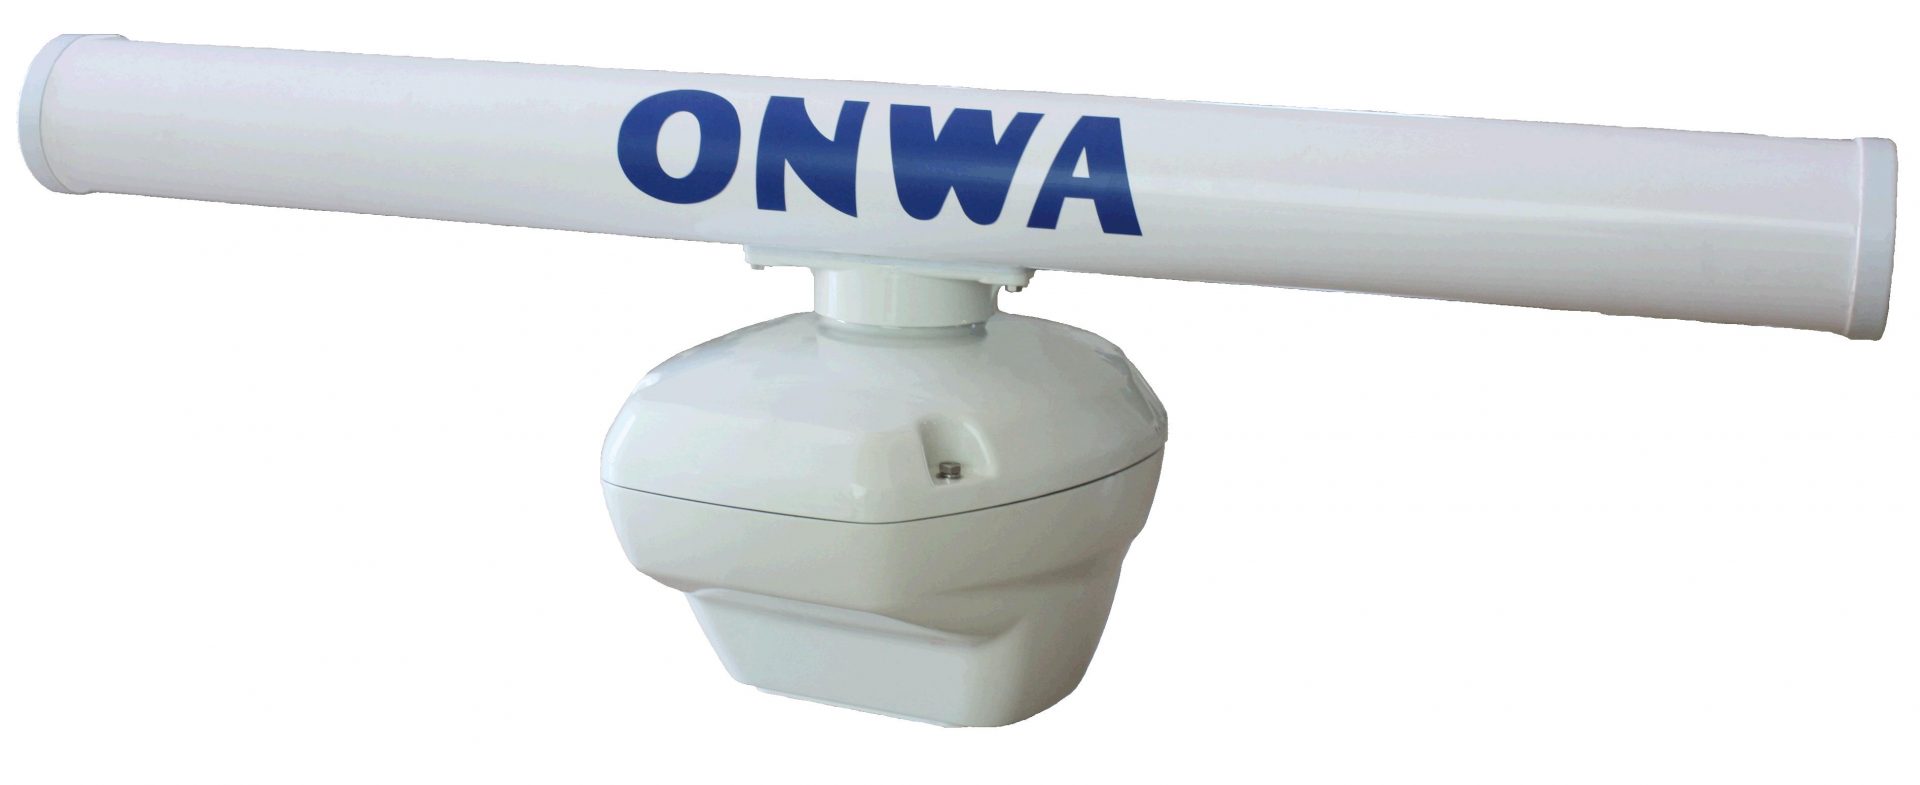 ONWA Marine Electronics Accessories